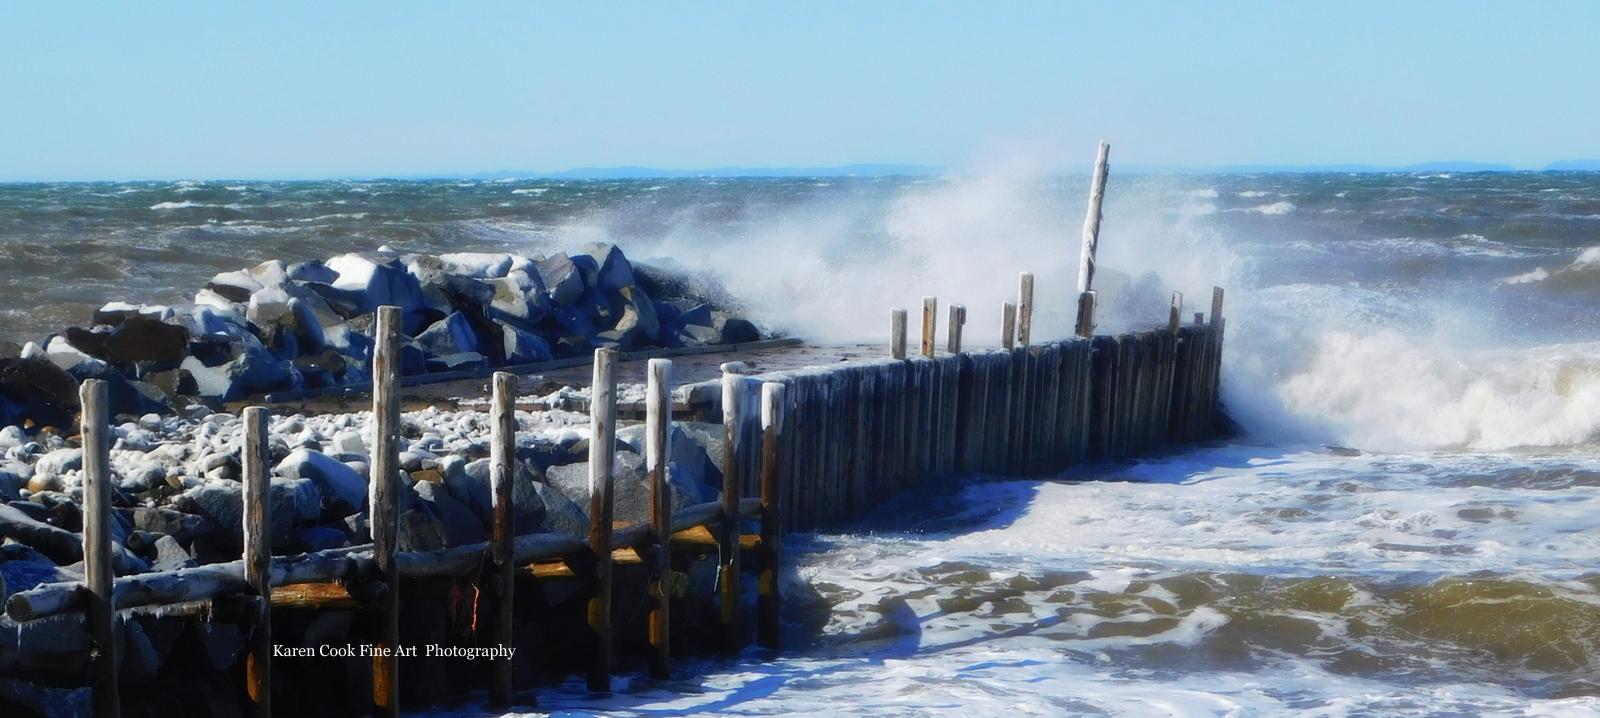 3rd Place Stormy seas at Port George, Nova Scotia by Karen Cook @KarenCookPhotos